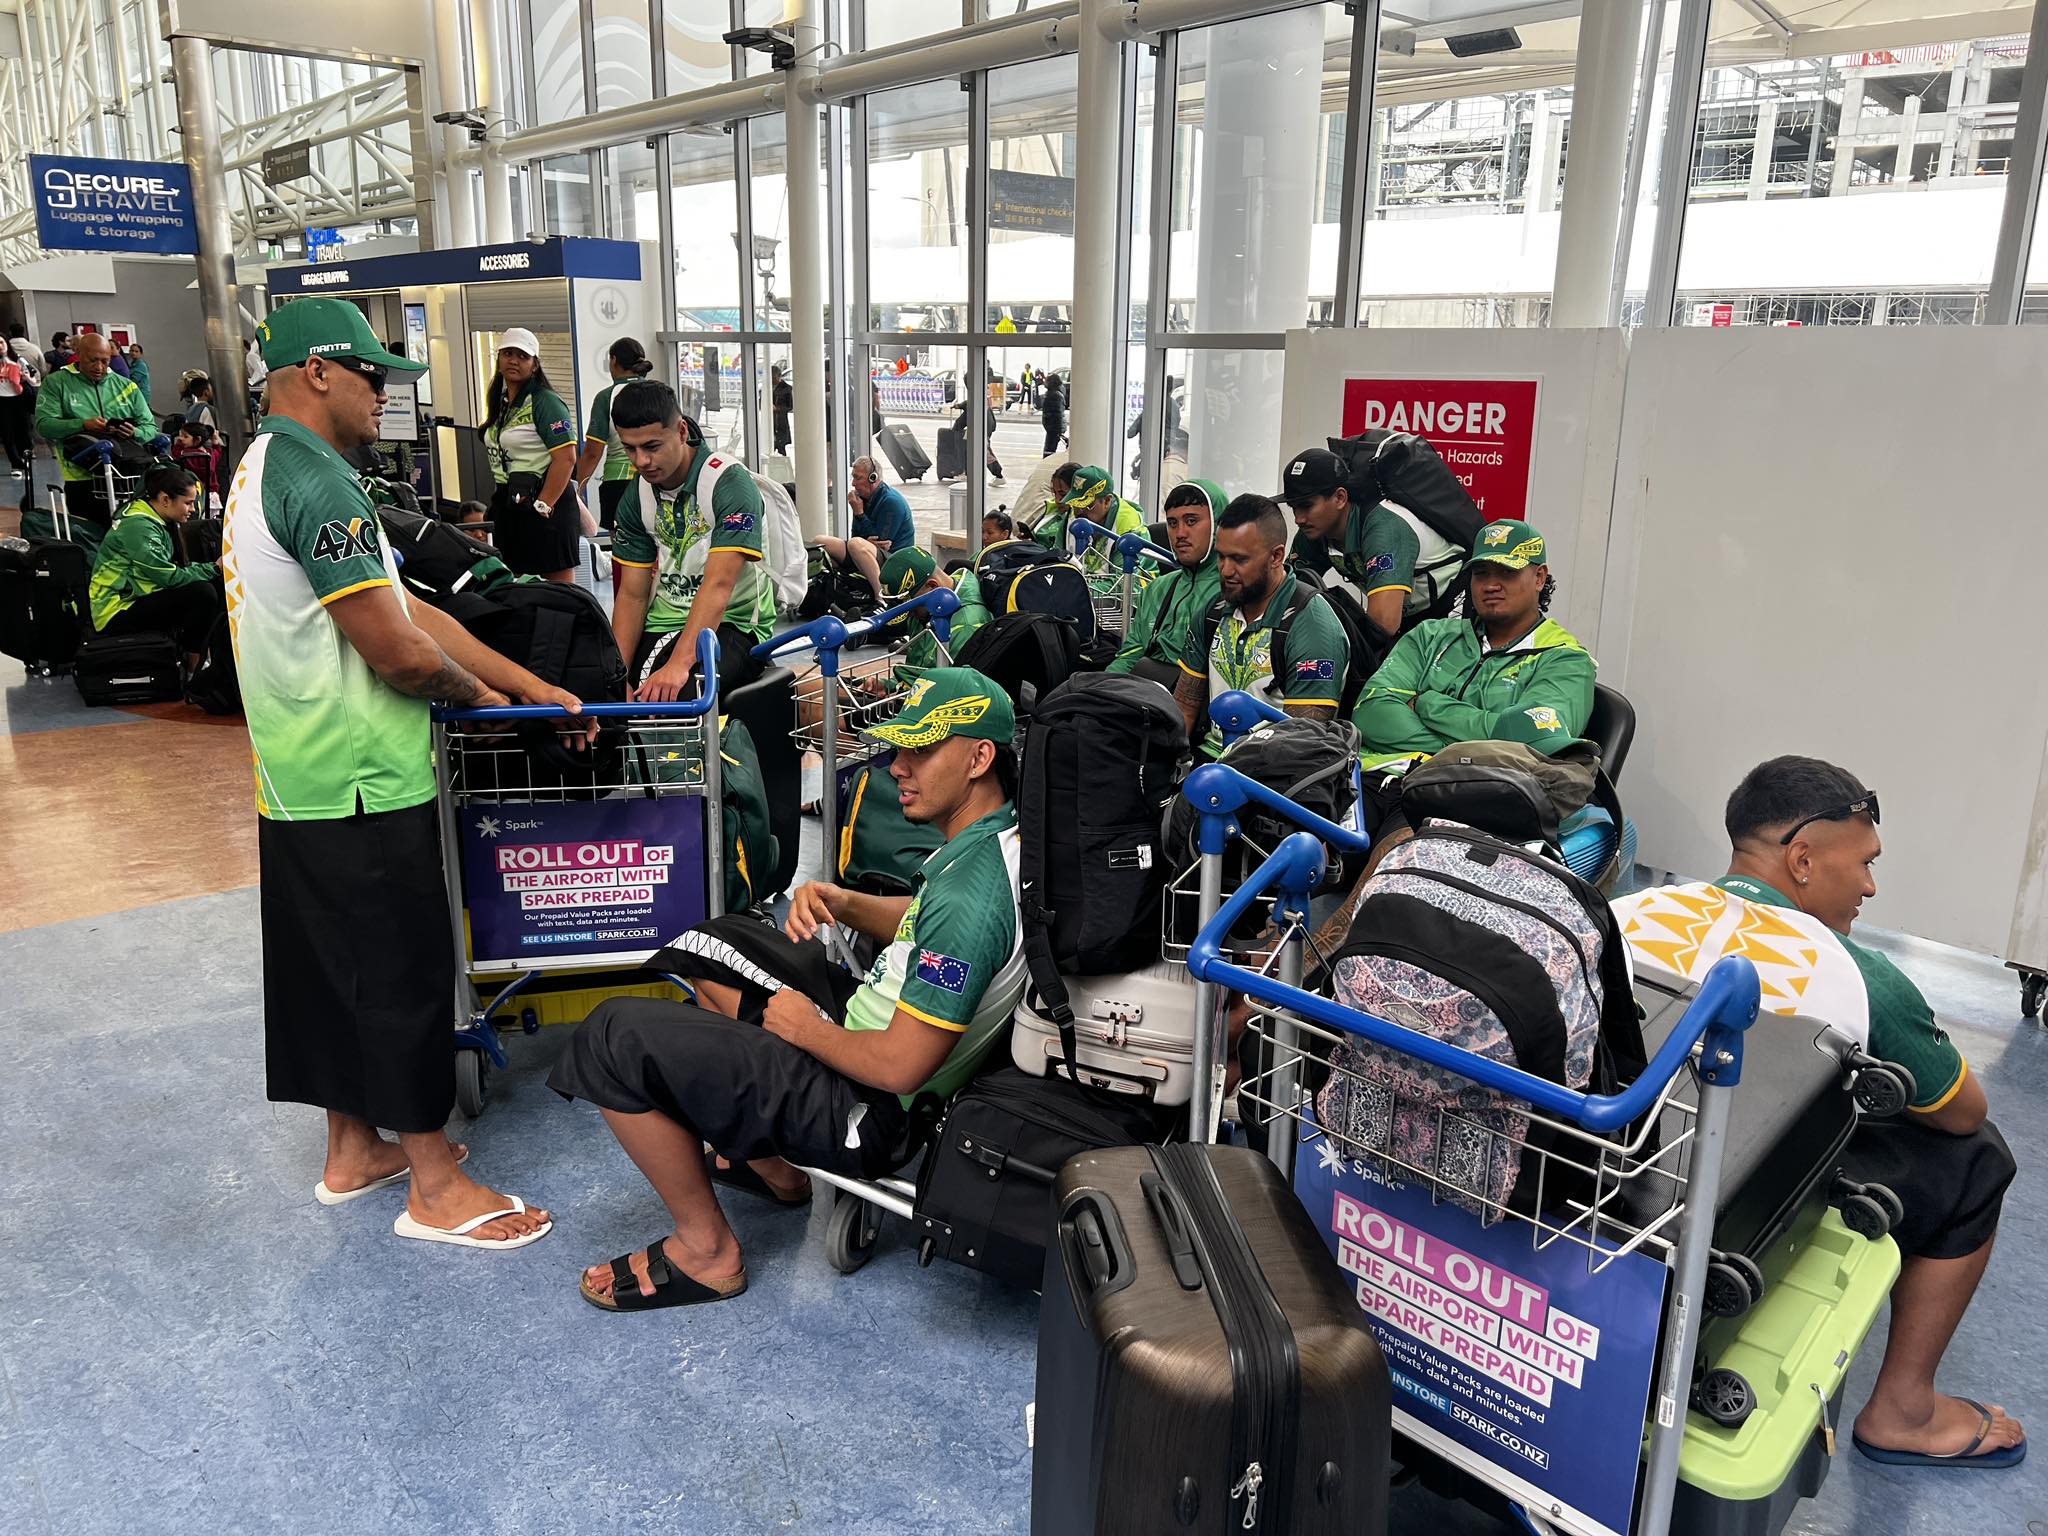 Cook Islands League Nines teams scramble for alternative travel arrangements after cancelled flight